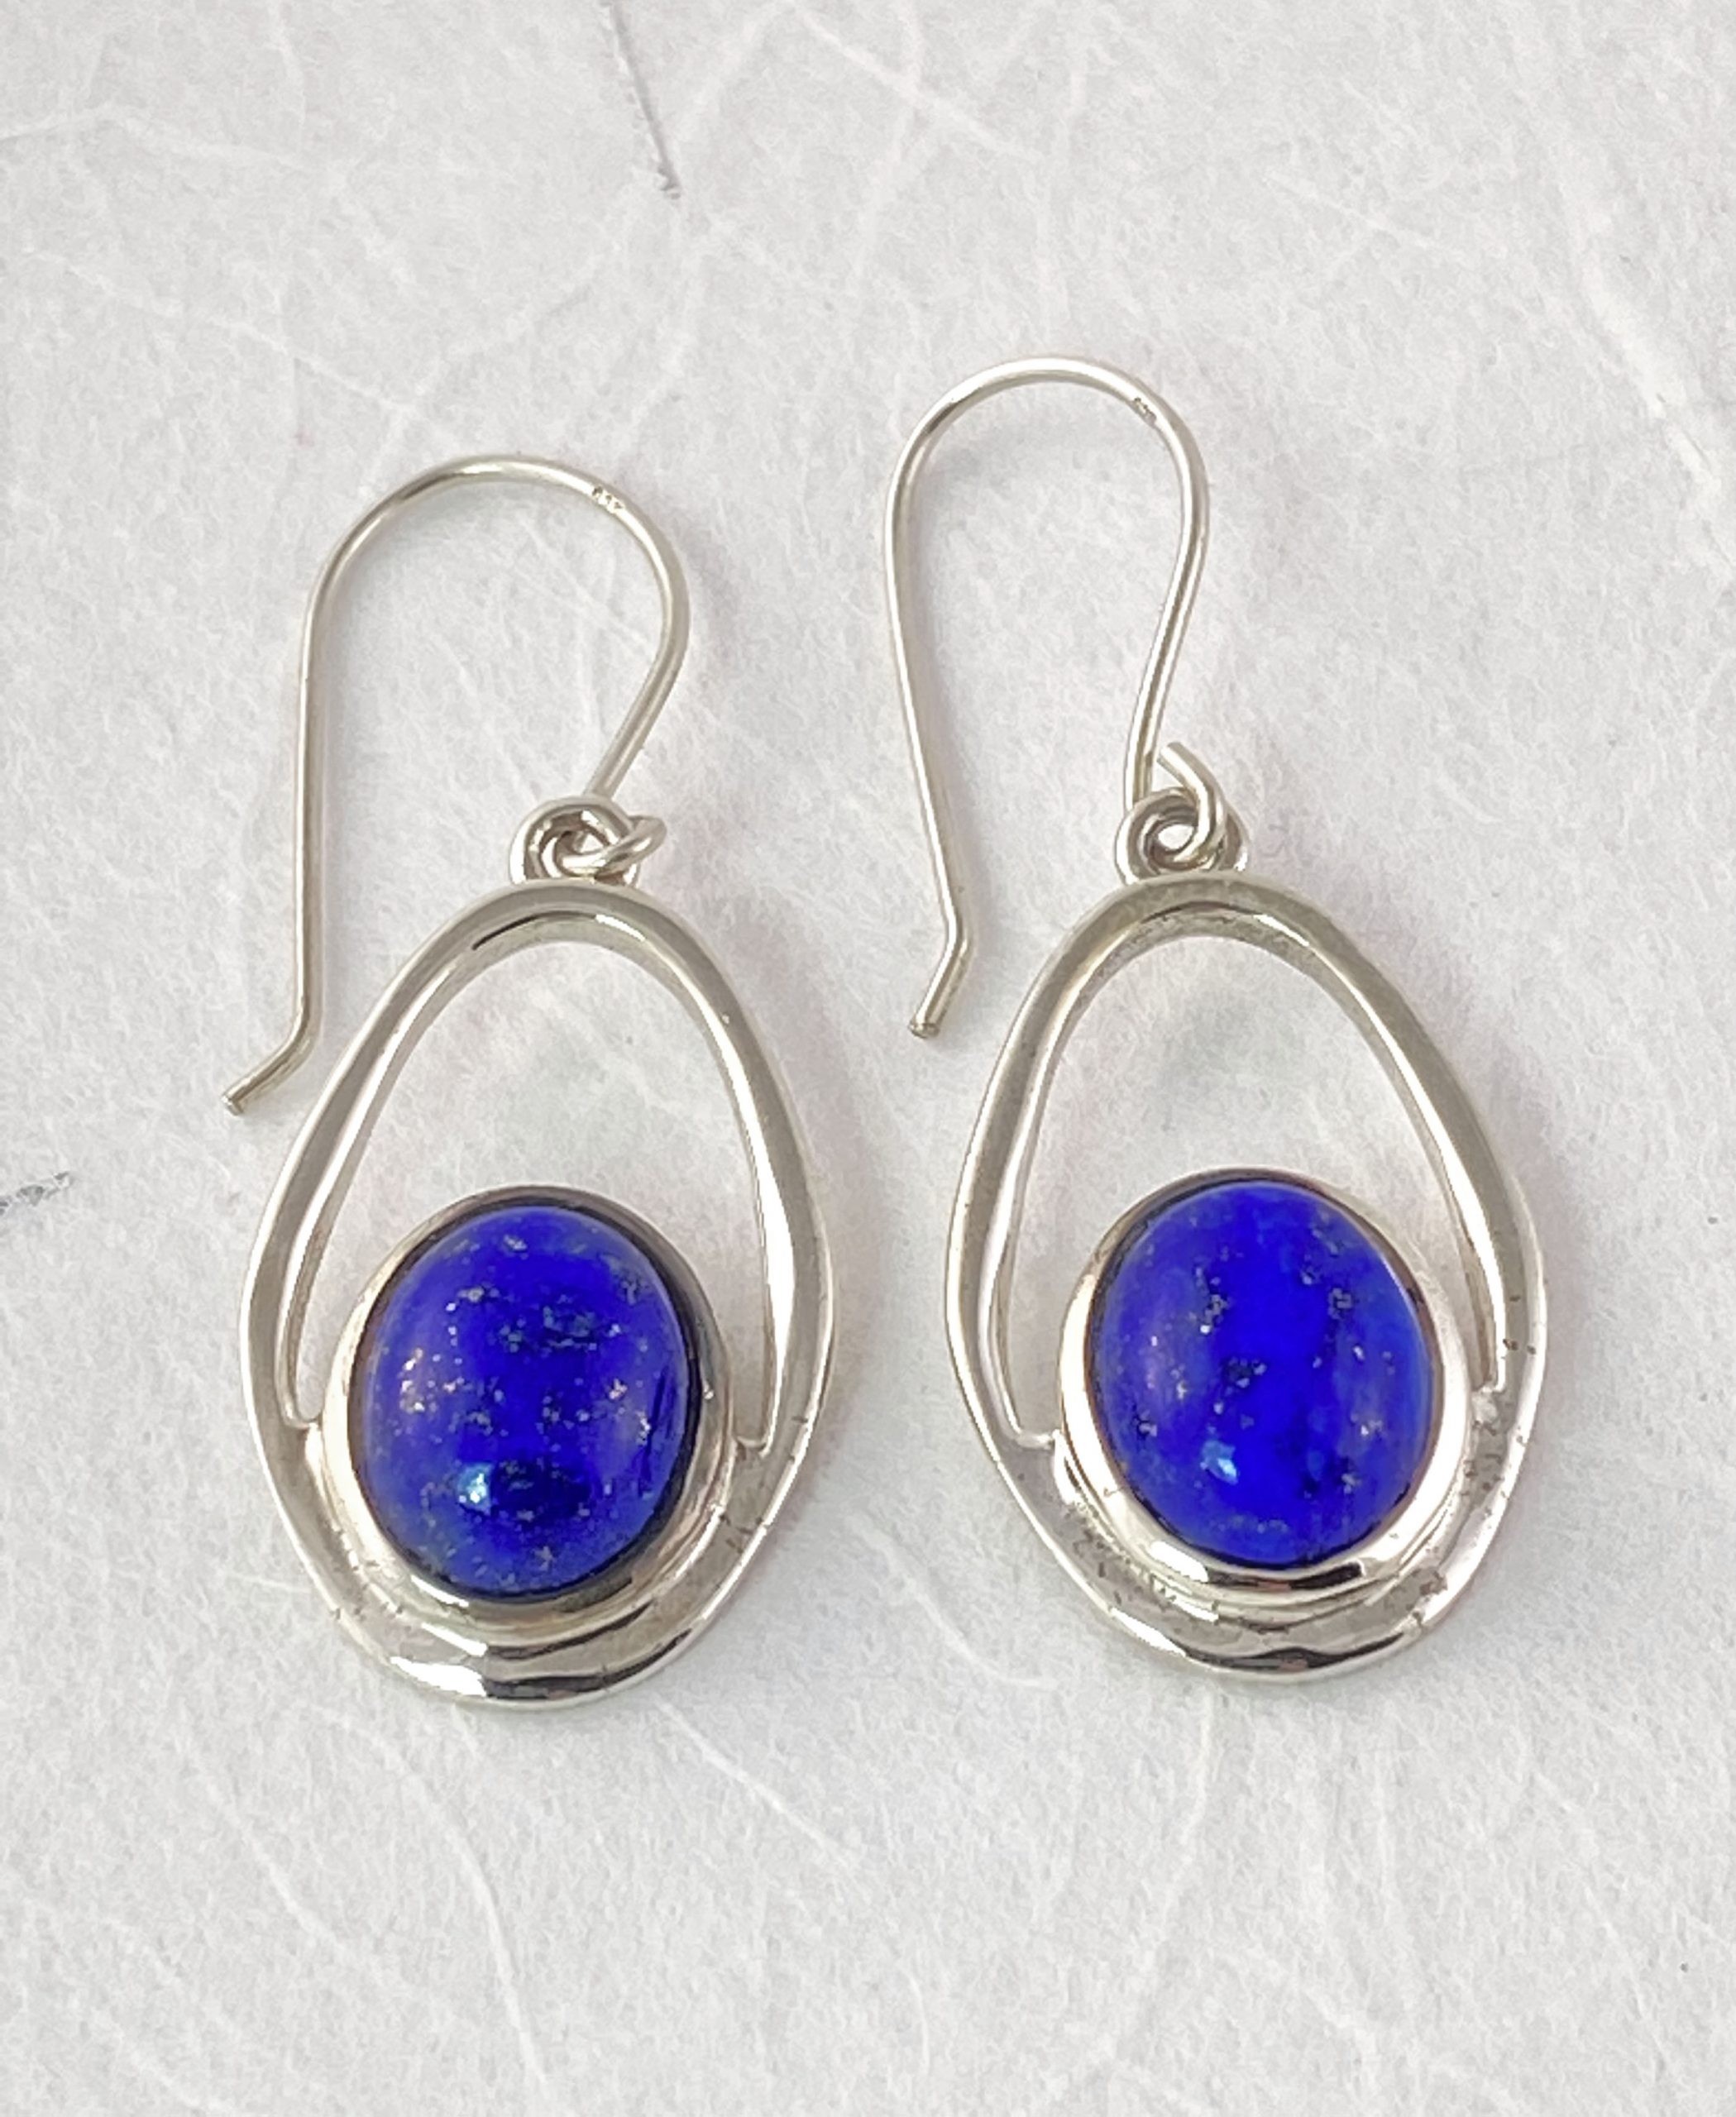 Lapis cabochon stone earrings